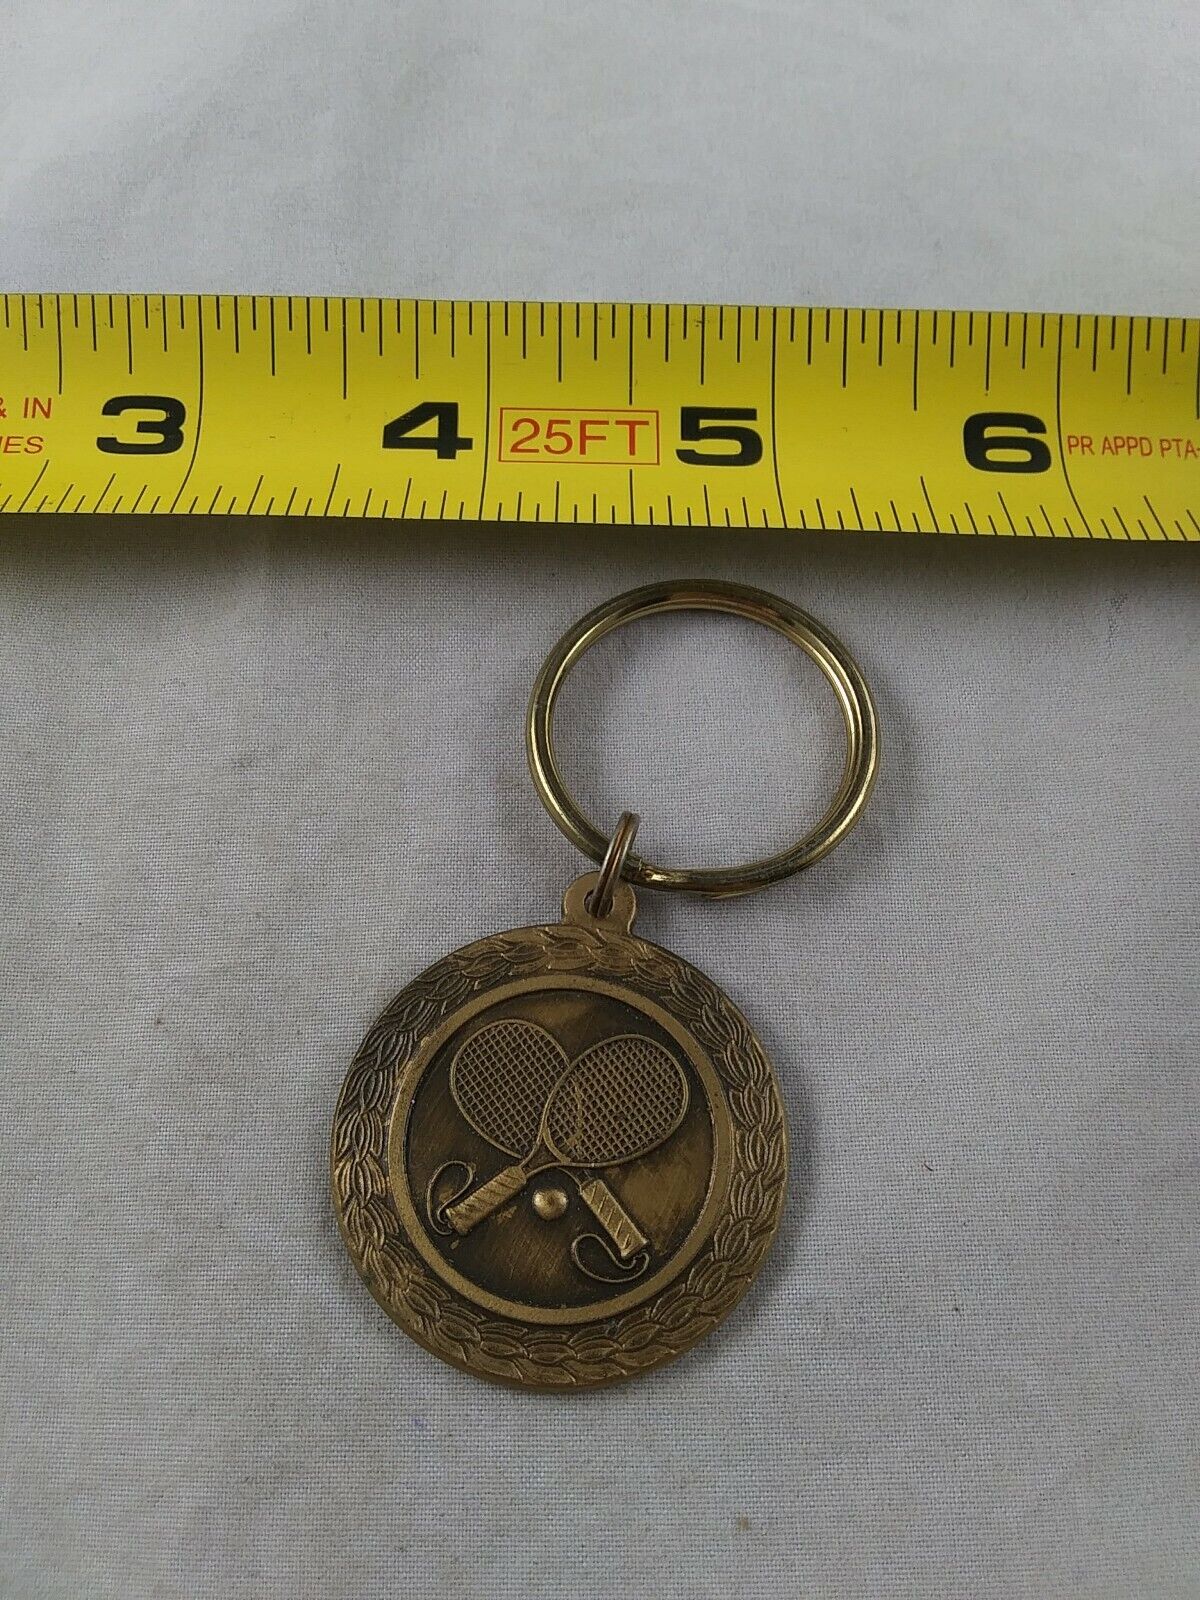 Vintage SARANAC PRO-AM 1985 Medal Keychain Key Ring Chain Hangtag Fob *QQ53